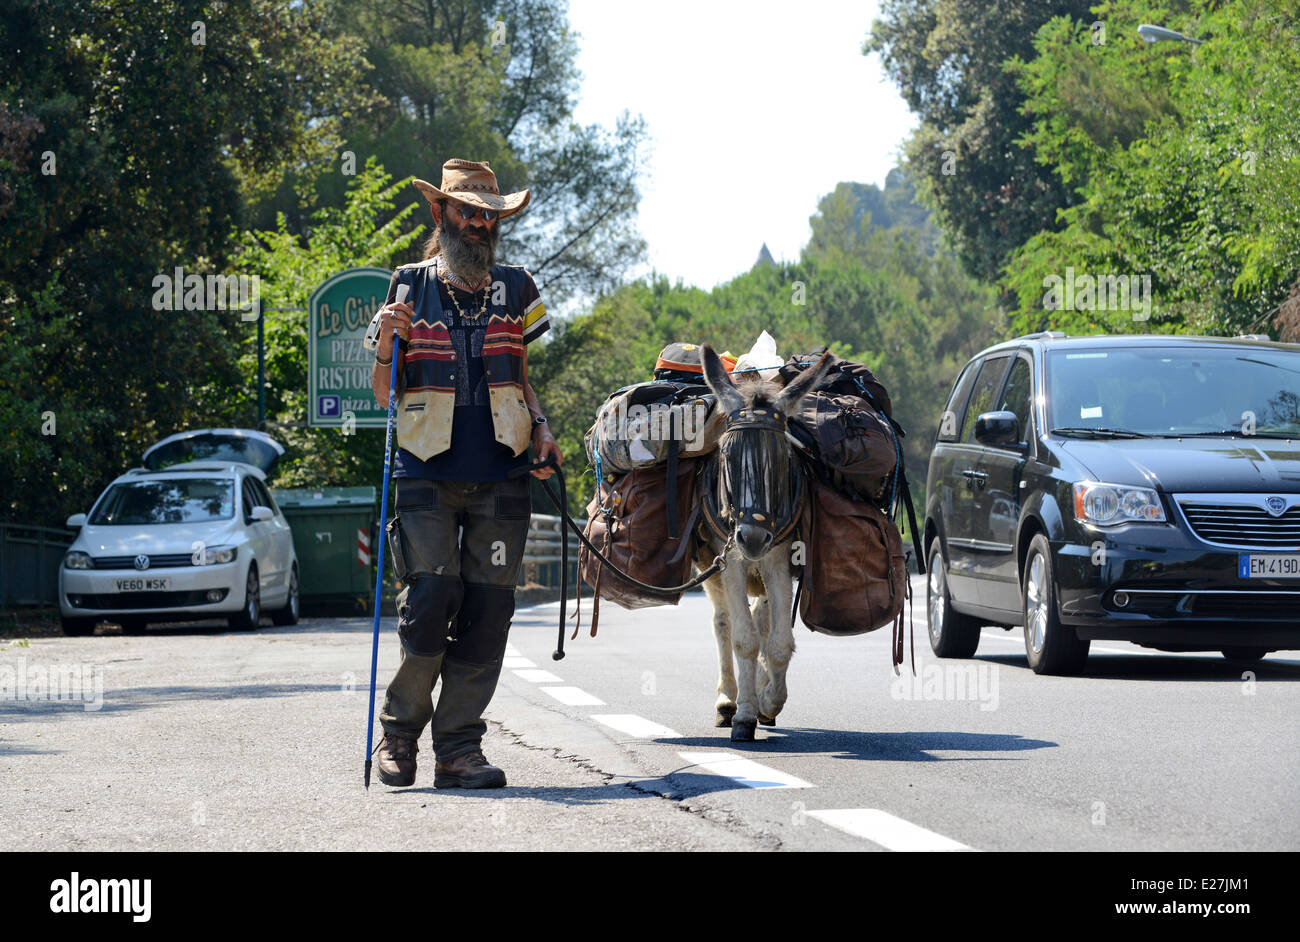 Man travelling with donkey near Chiavari Italy on their way to Strasbourg / donkeys mule old hippy man walking travelling animal Stock Photo